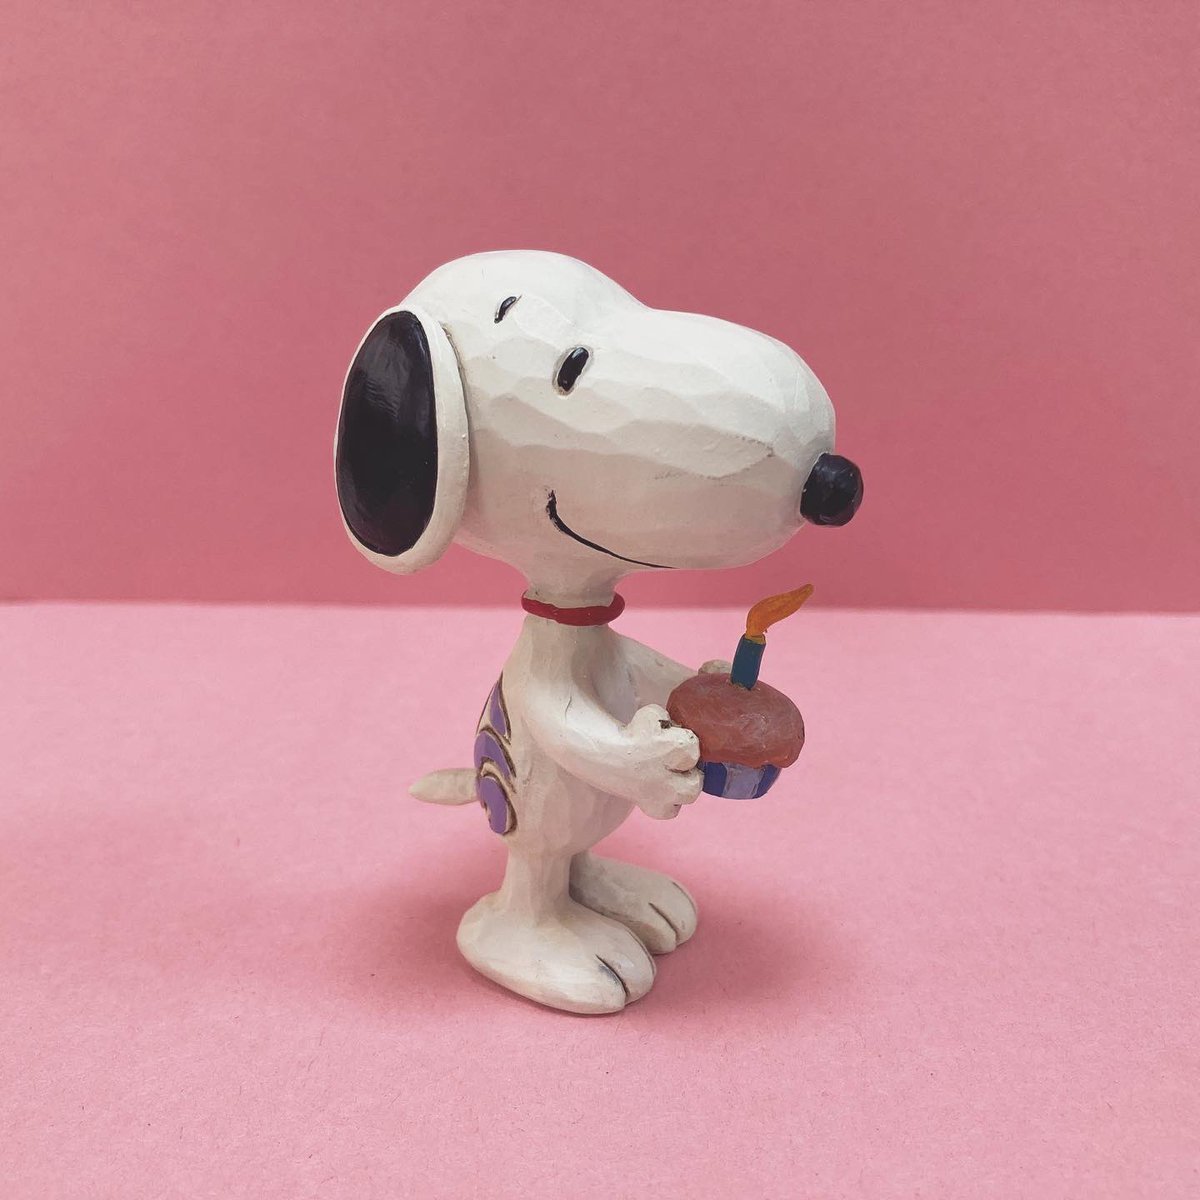 Citron Life アメリカ輸入 Snoopy Happy Birthday お友達の誕生日プレゼントにいかがですか T Co U75v8r7emf Peanuts Snoopy スヌーピー 誕生日プレゼント スヌーピーライフ スヌ活 Jimshore Enesco Happybirthday 誕生日